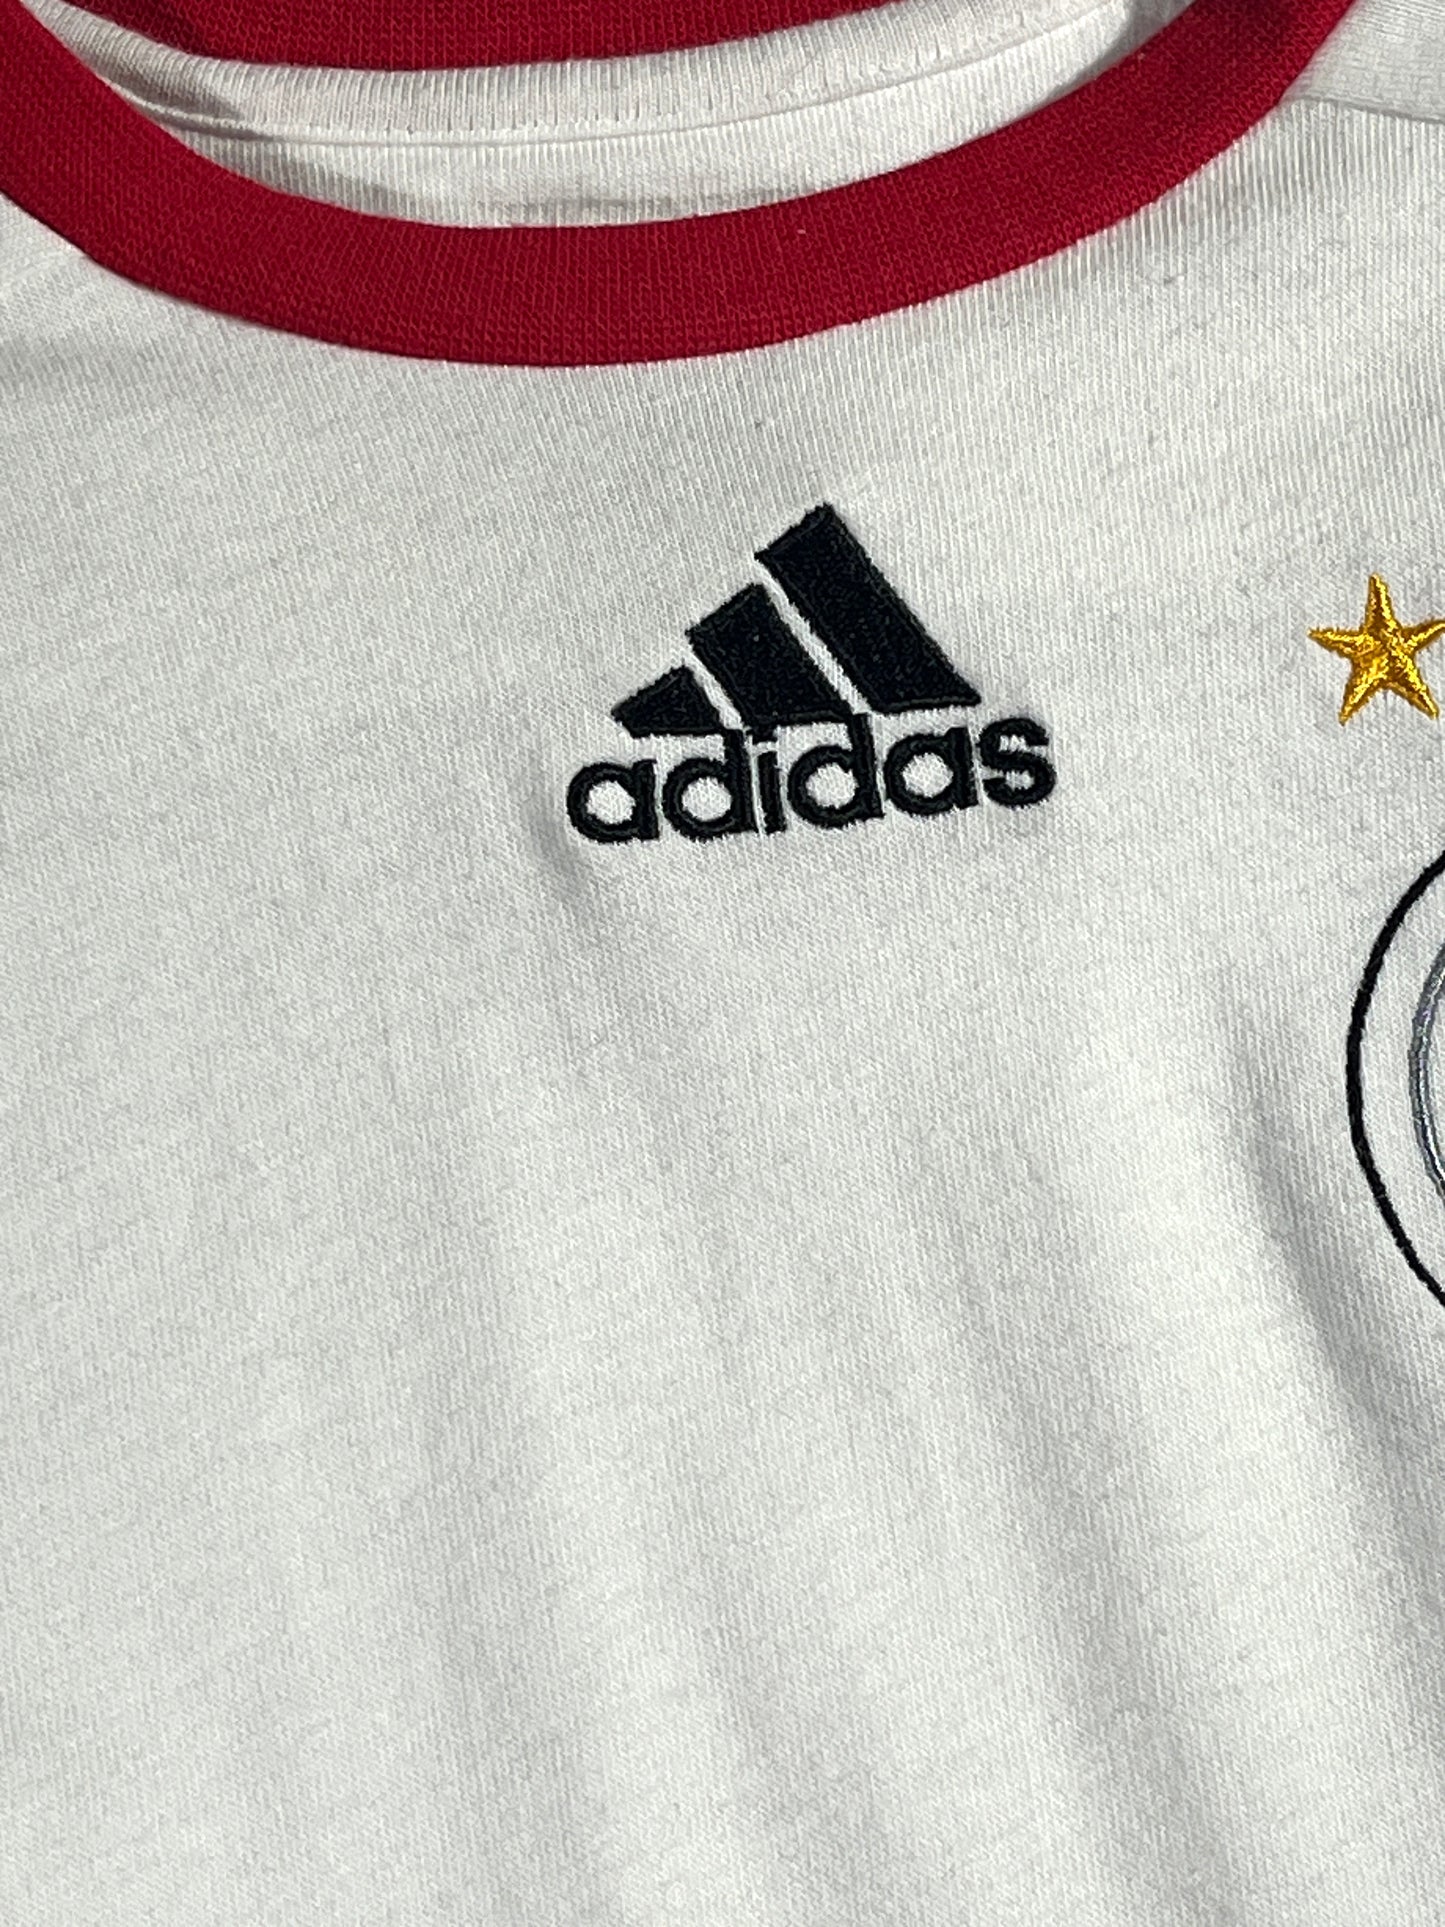 Vintage Germany Top Soccer Shirt Football Adidas